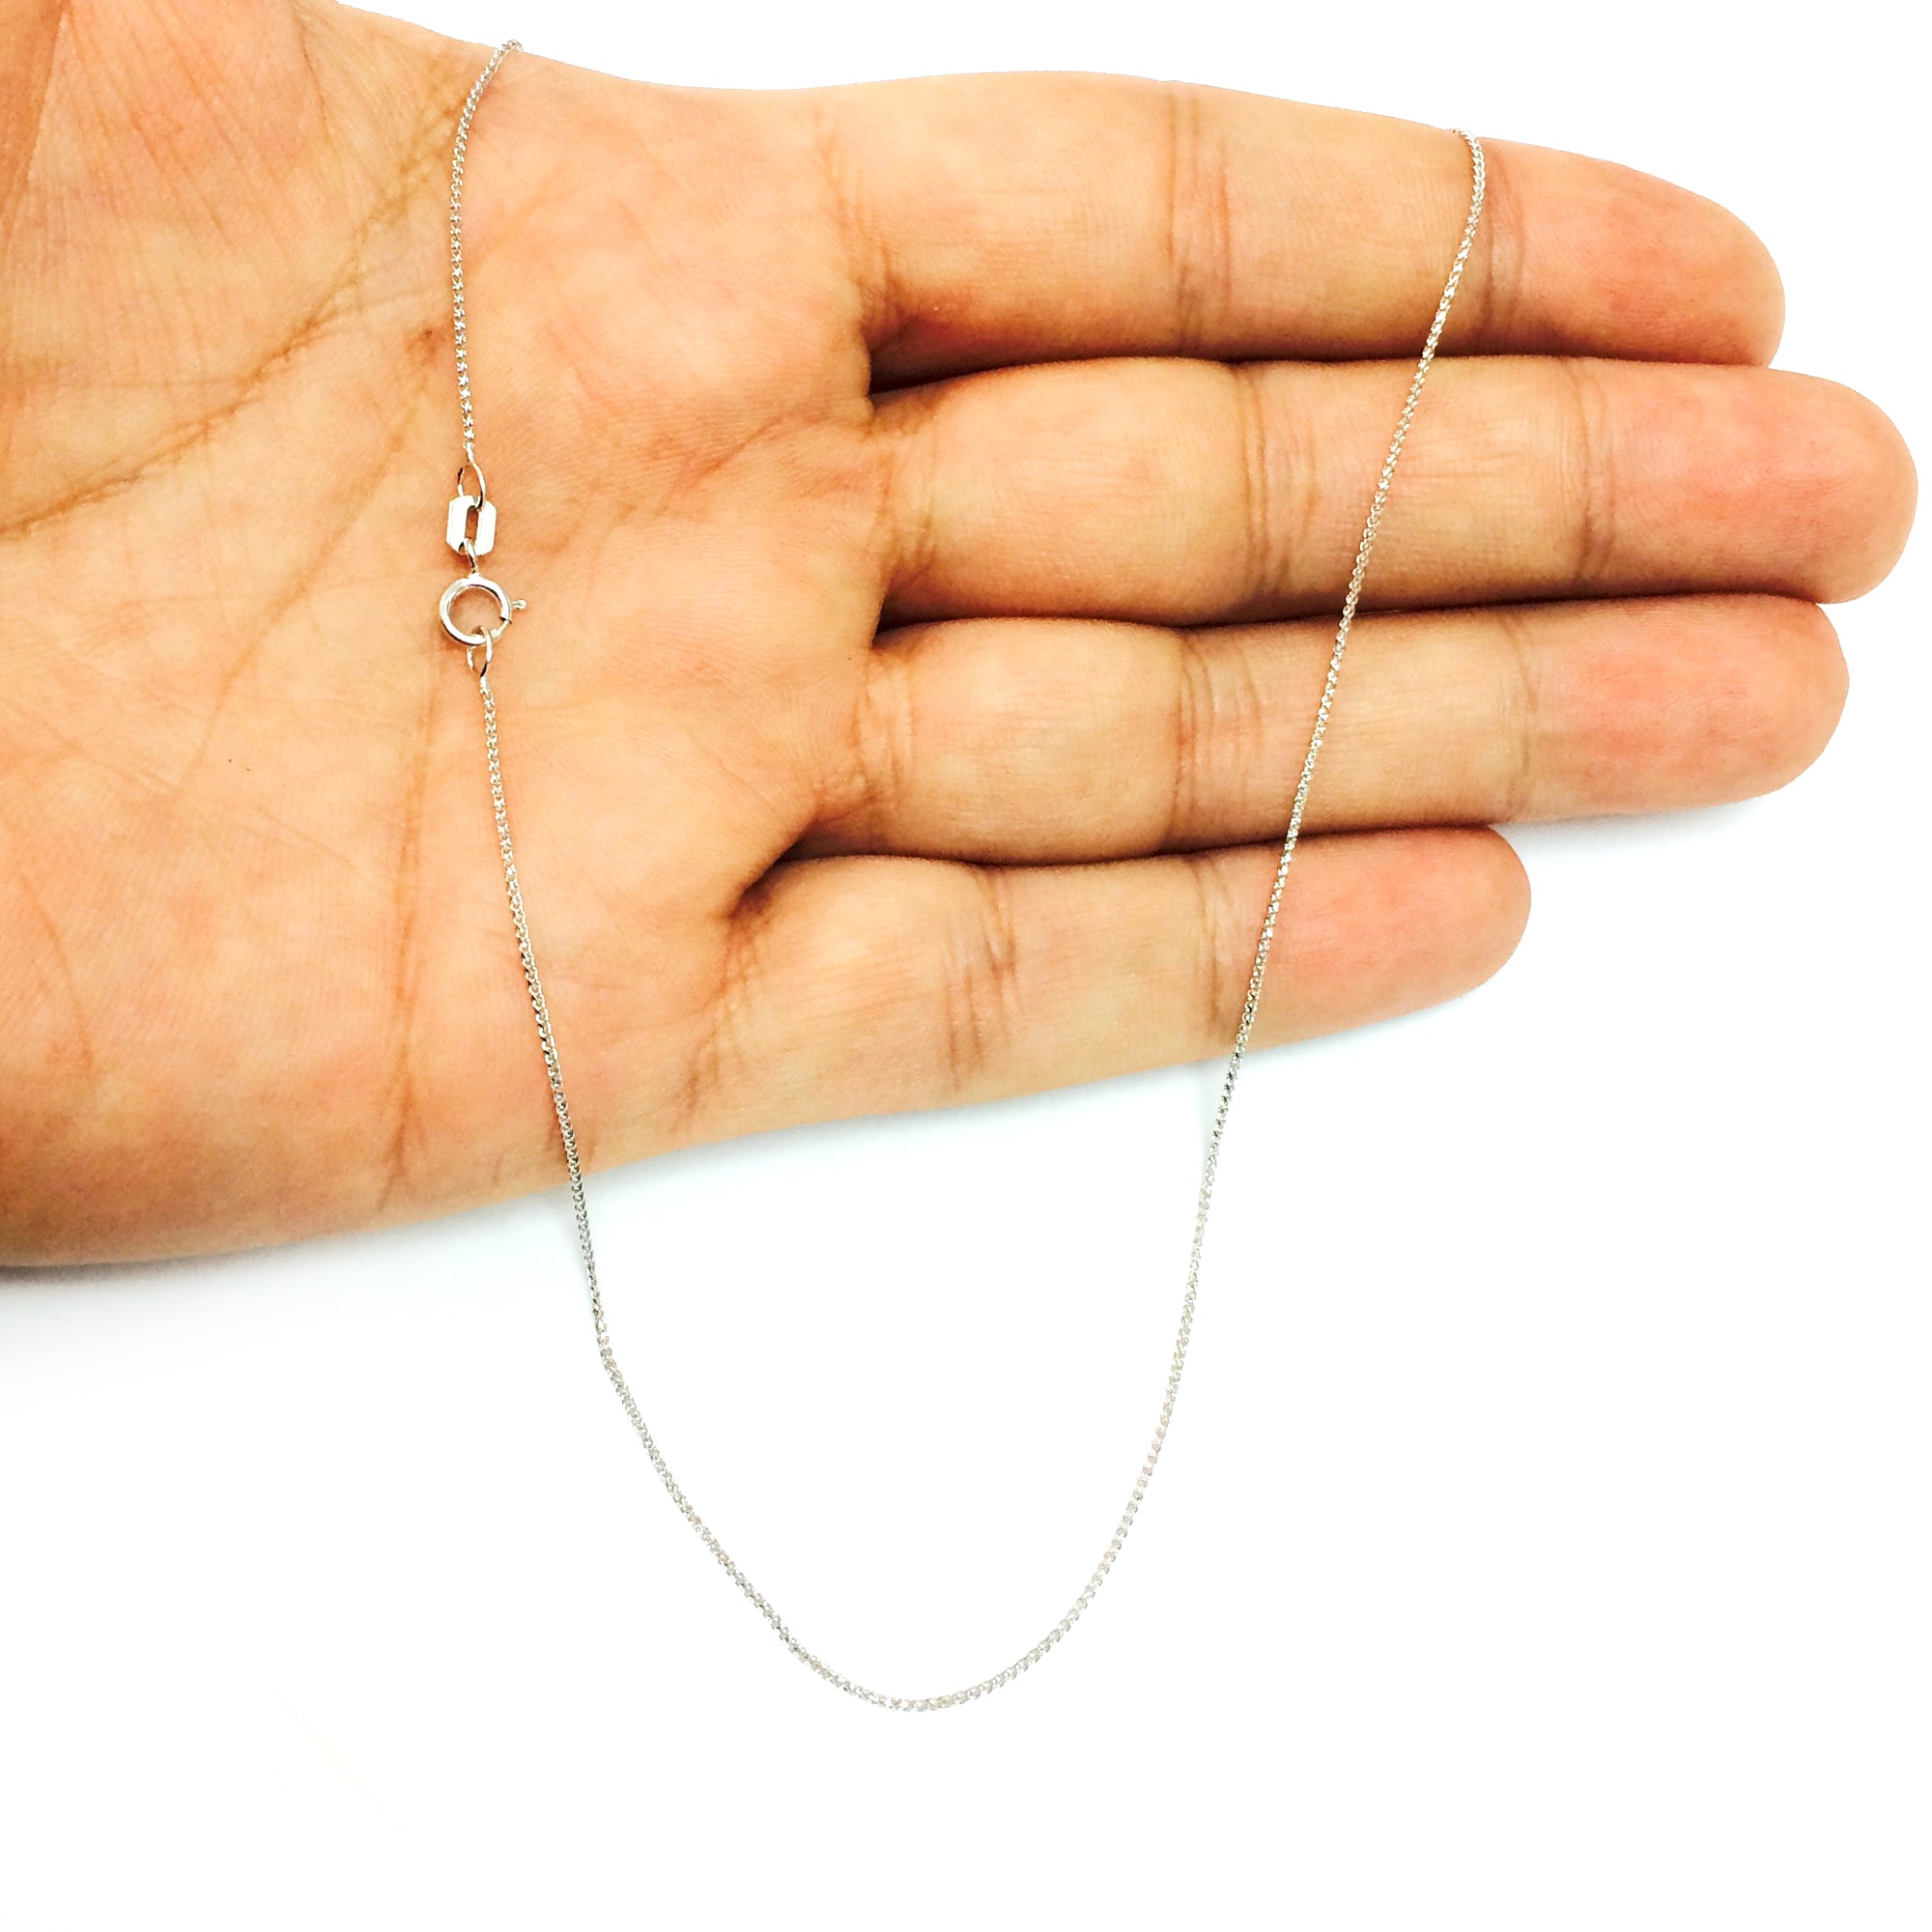 14k White Gold Round Diamond Cut Wheat Chain Necklace, 0.6mm fine designer jewelry for men and women